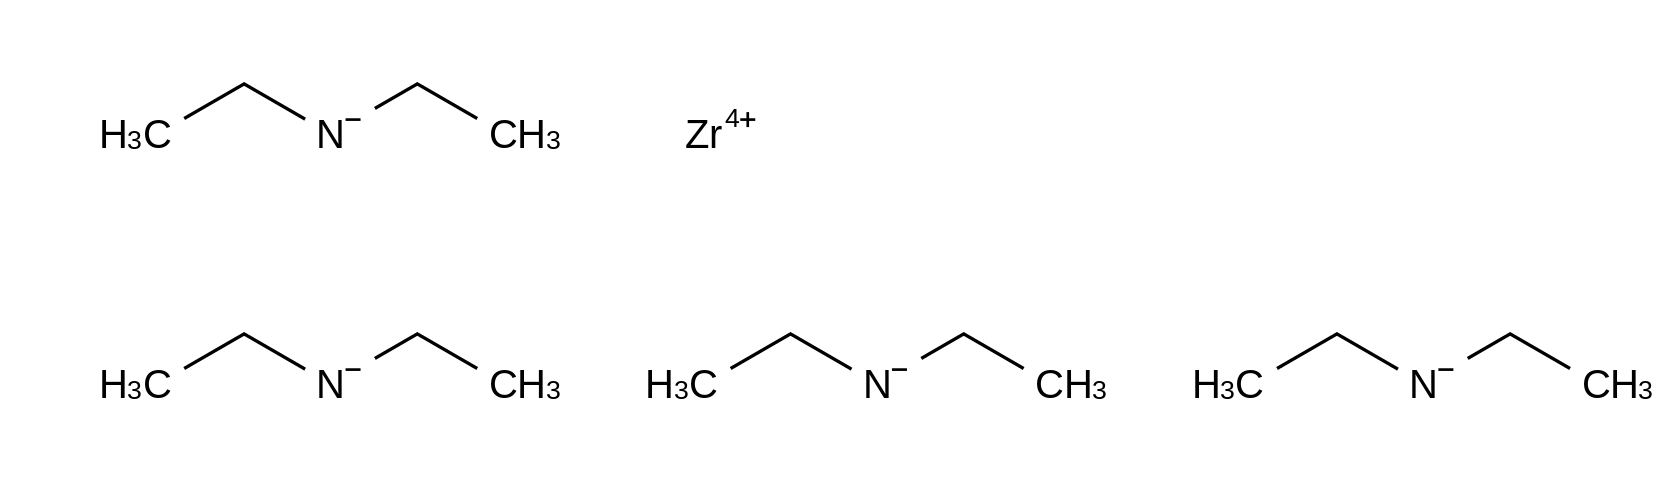 Tetrakis(diethylamino)zirconium